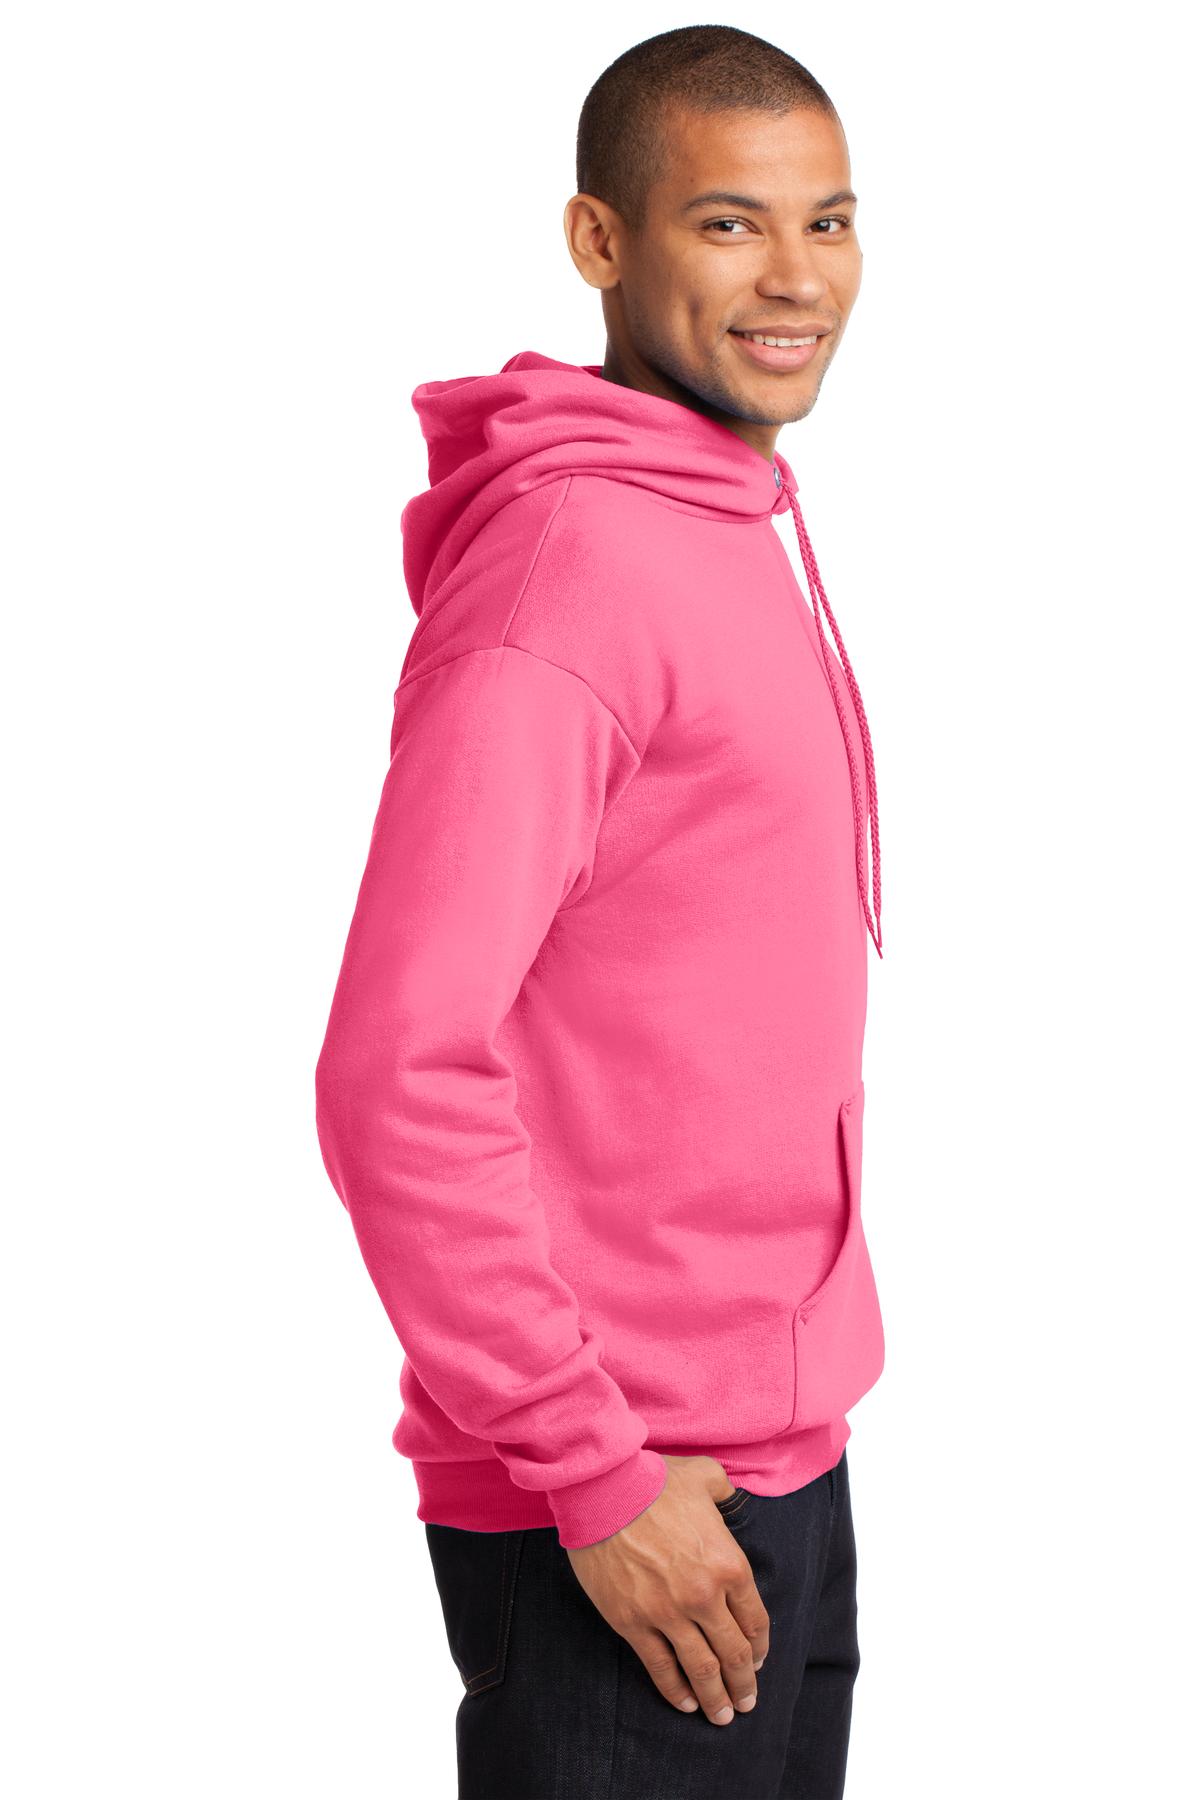 Port & Company - Core Fleece Pullover Hooded Sweatshirt. PC78H - Neon Pink